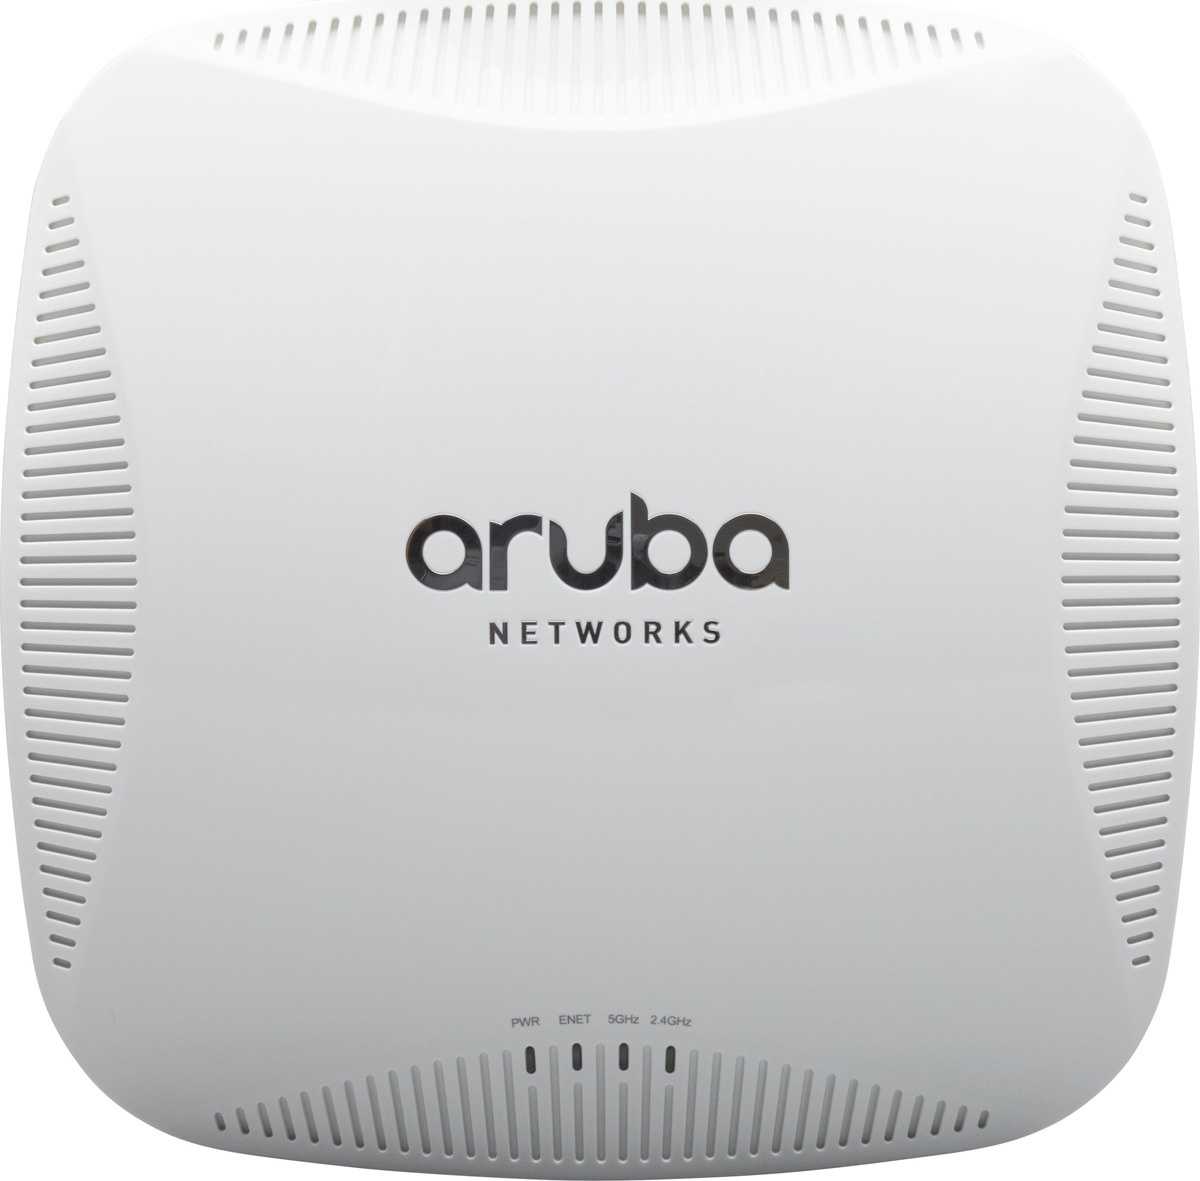 Aruba networks iap-135